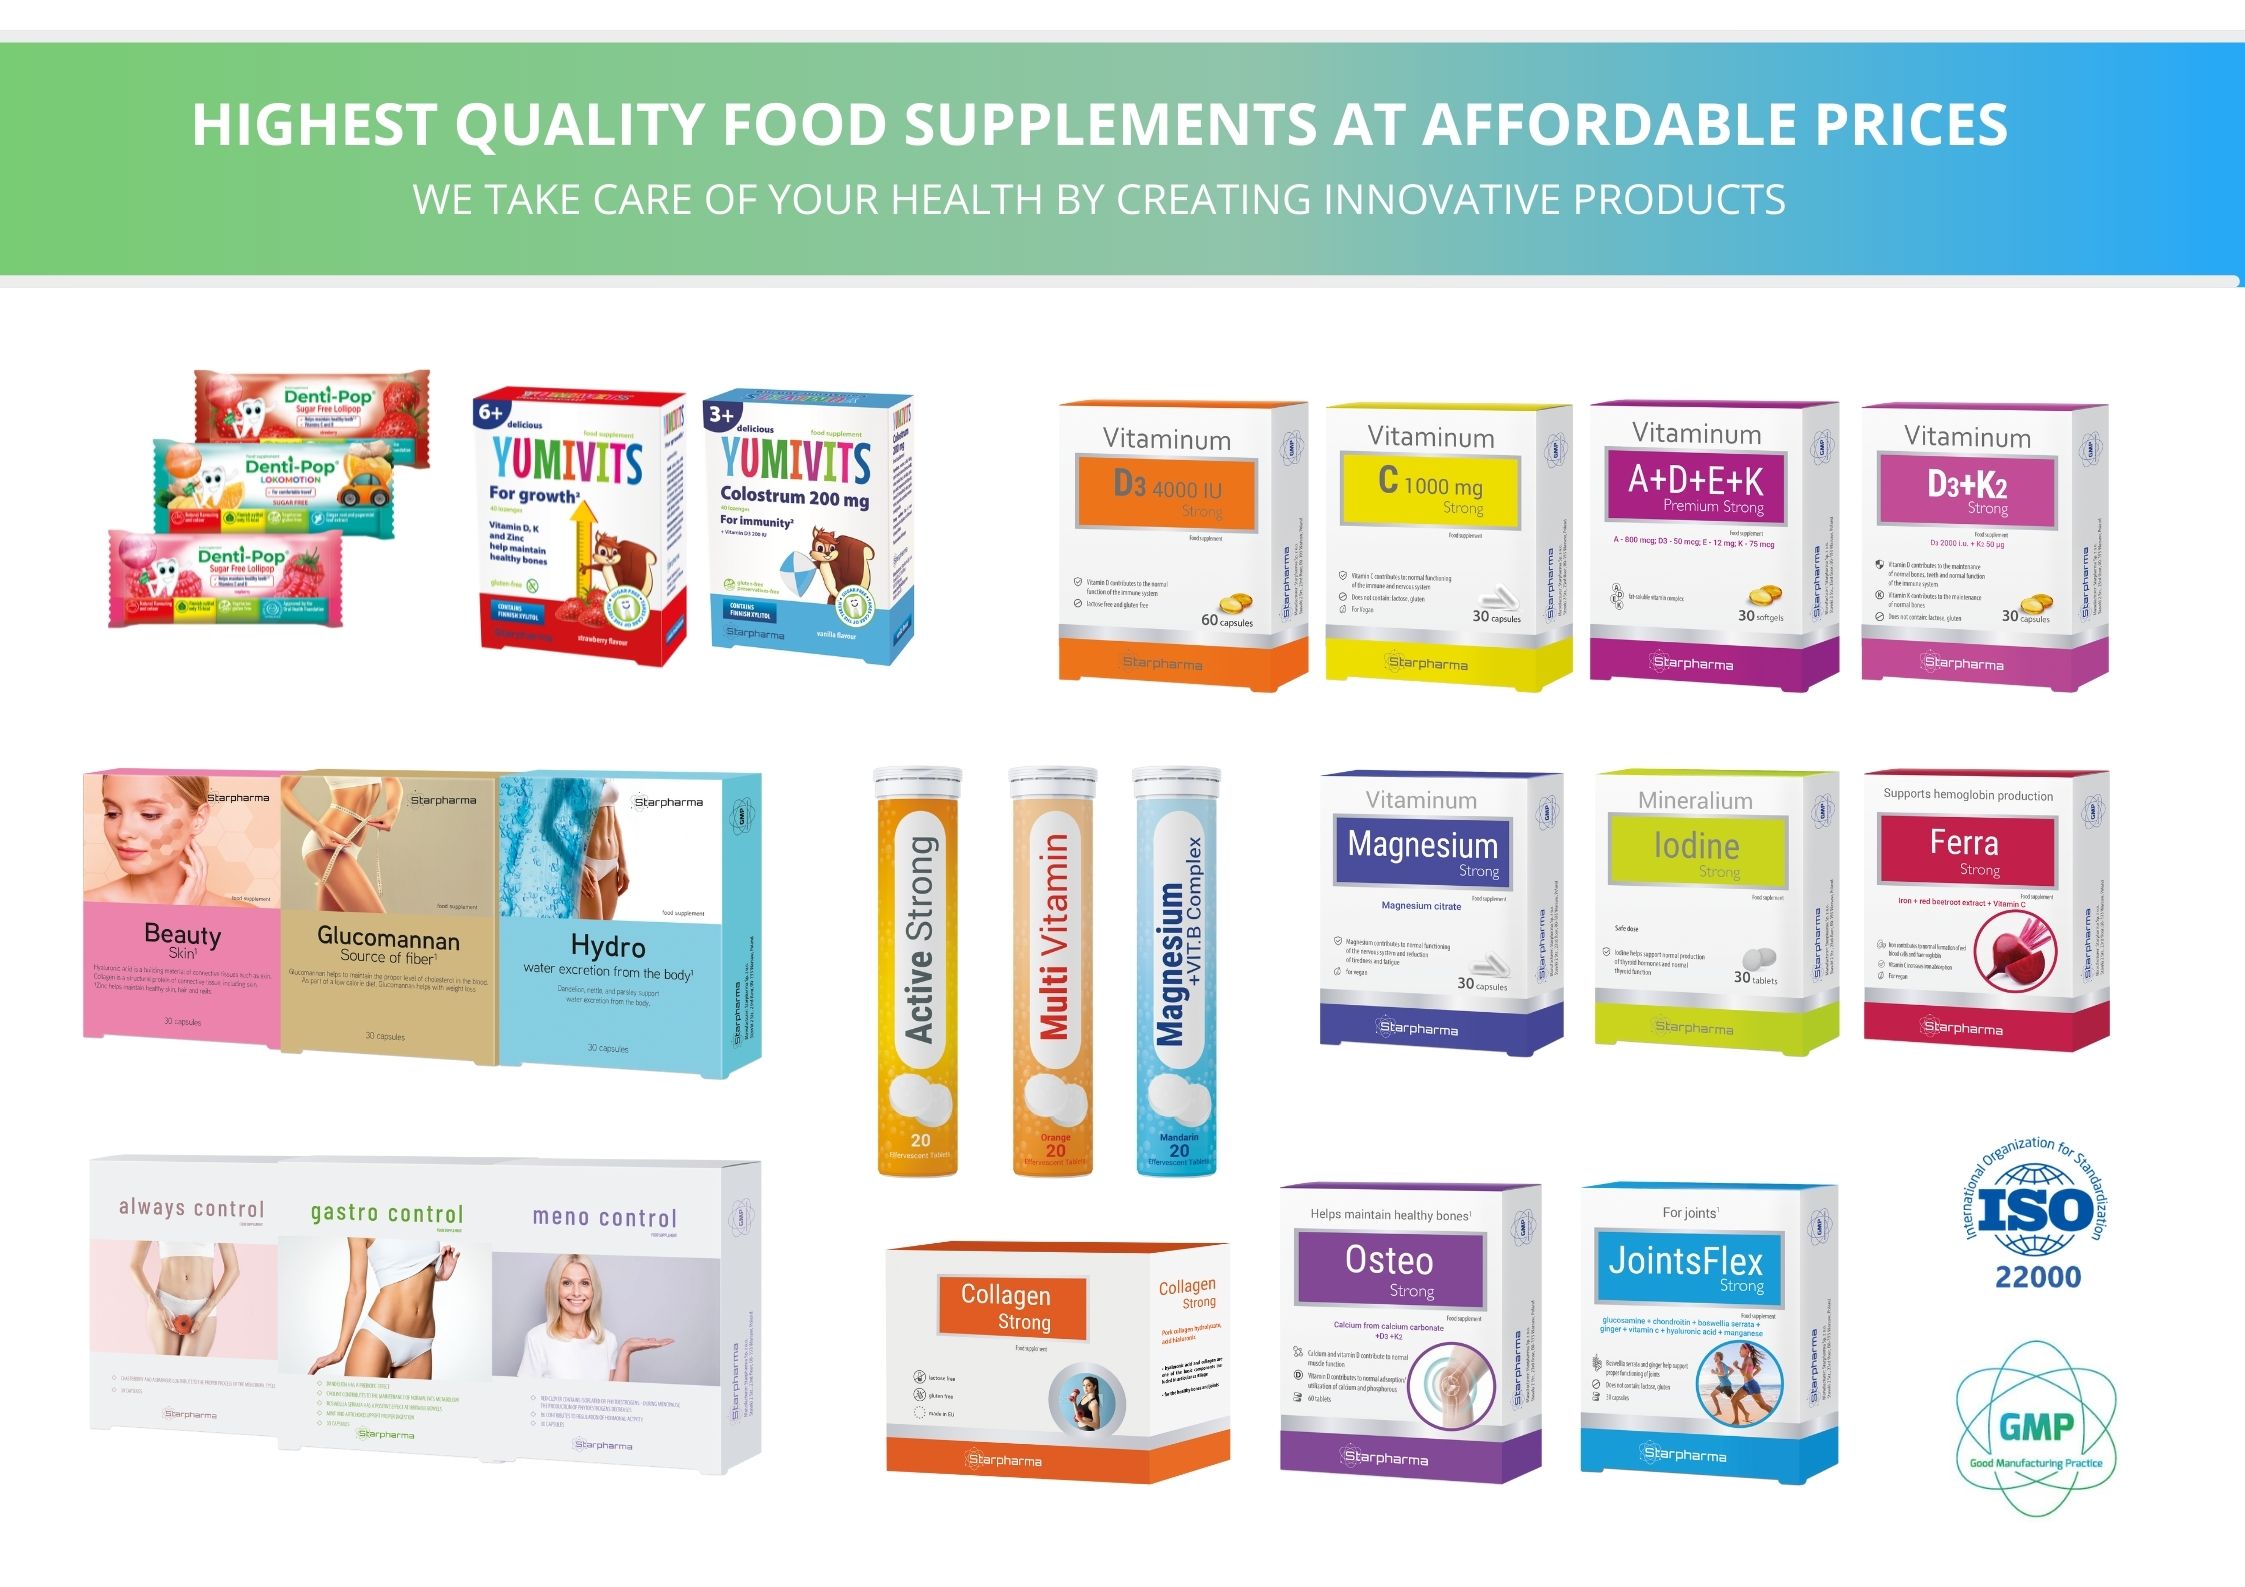 Food supplements&Denti-Pop